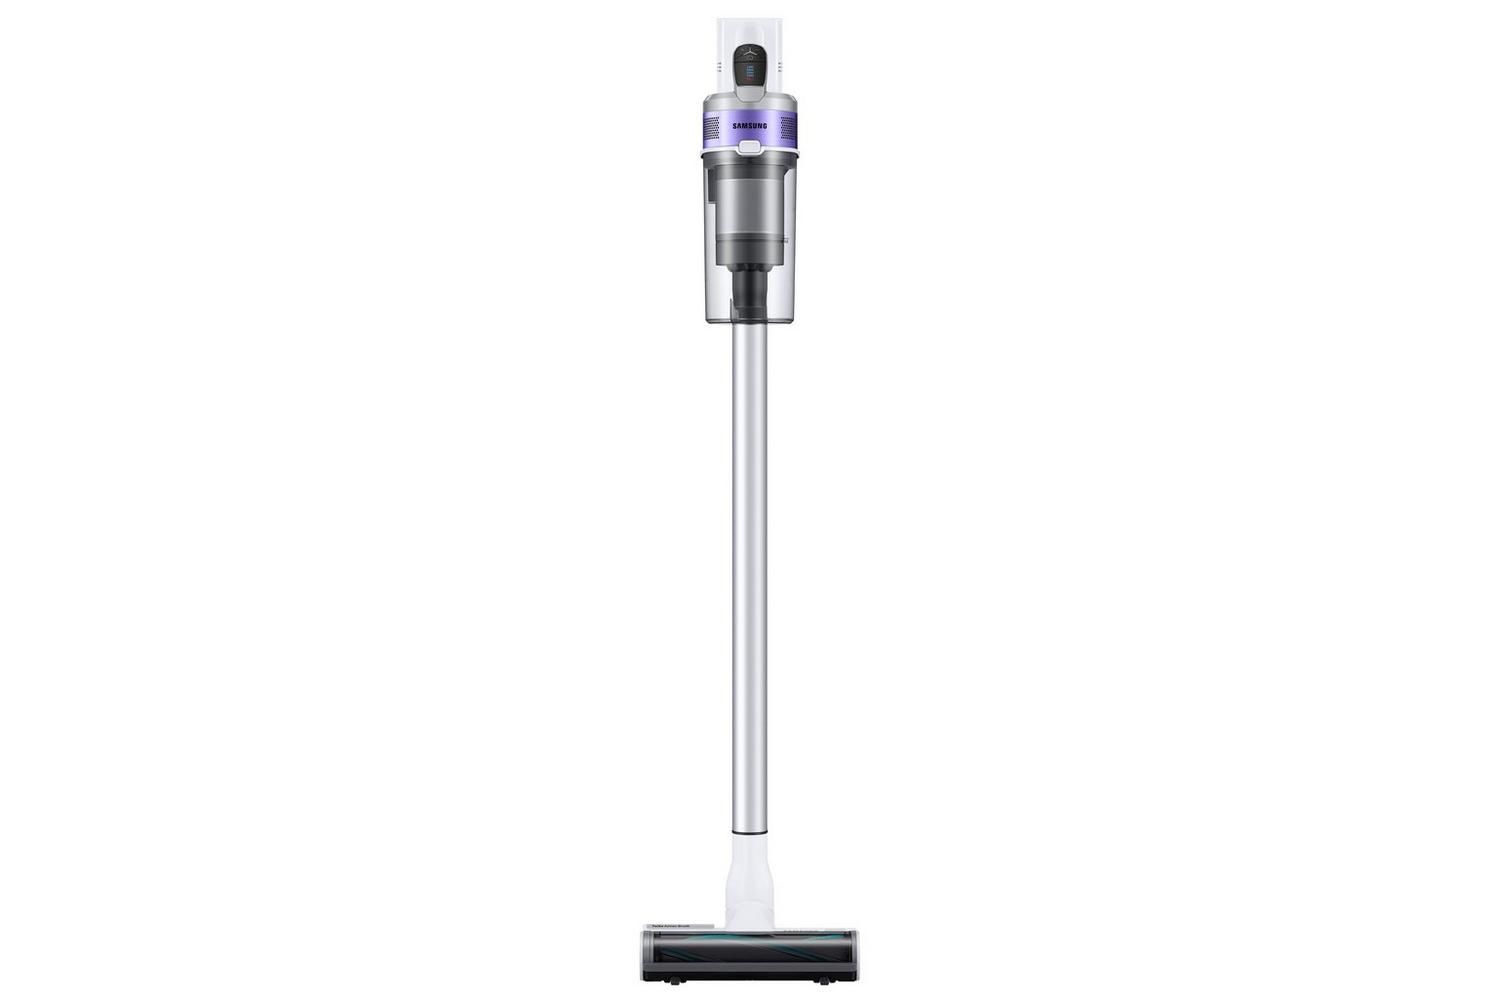 Samsung VS15T7031R4 Vacuum Cleaner Cordless Stick Jet 70 Turbo